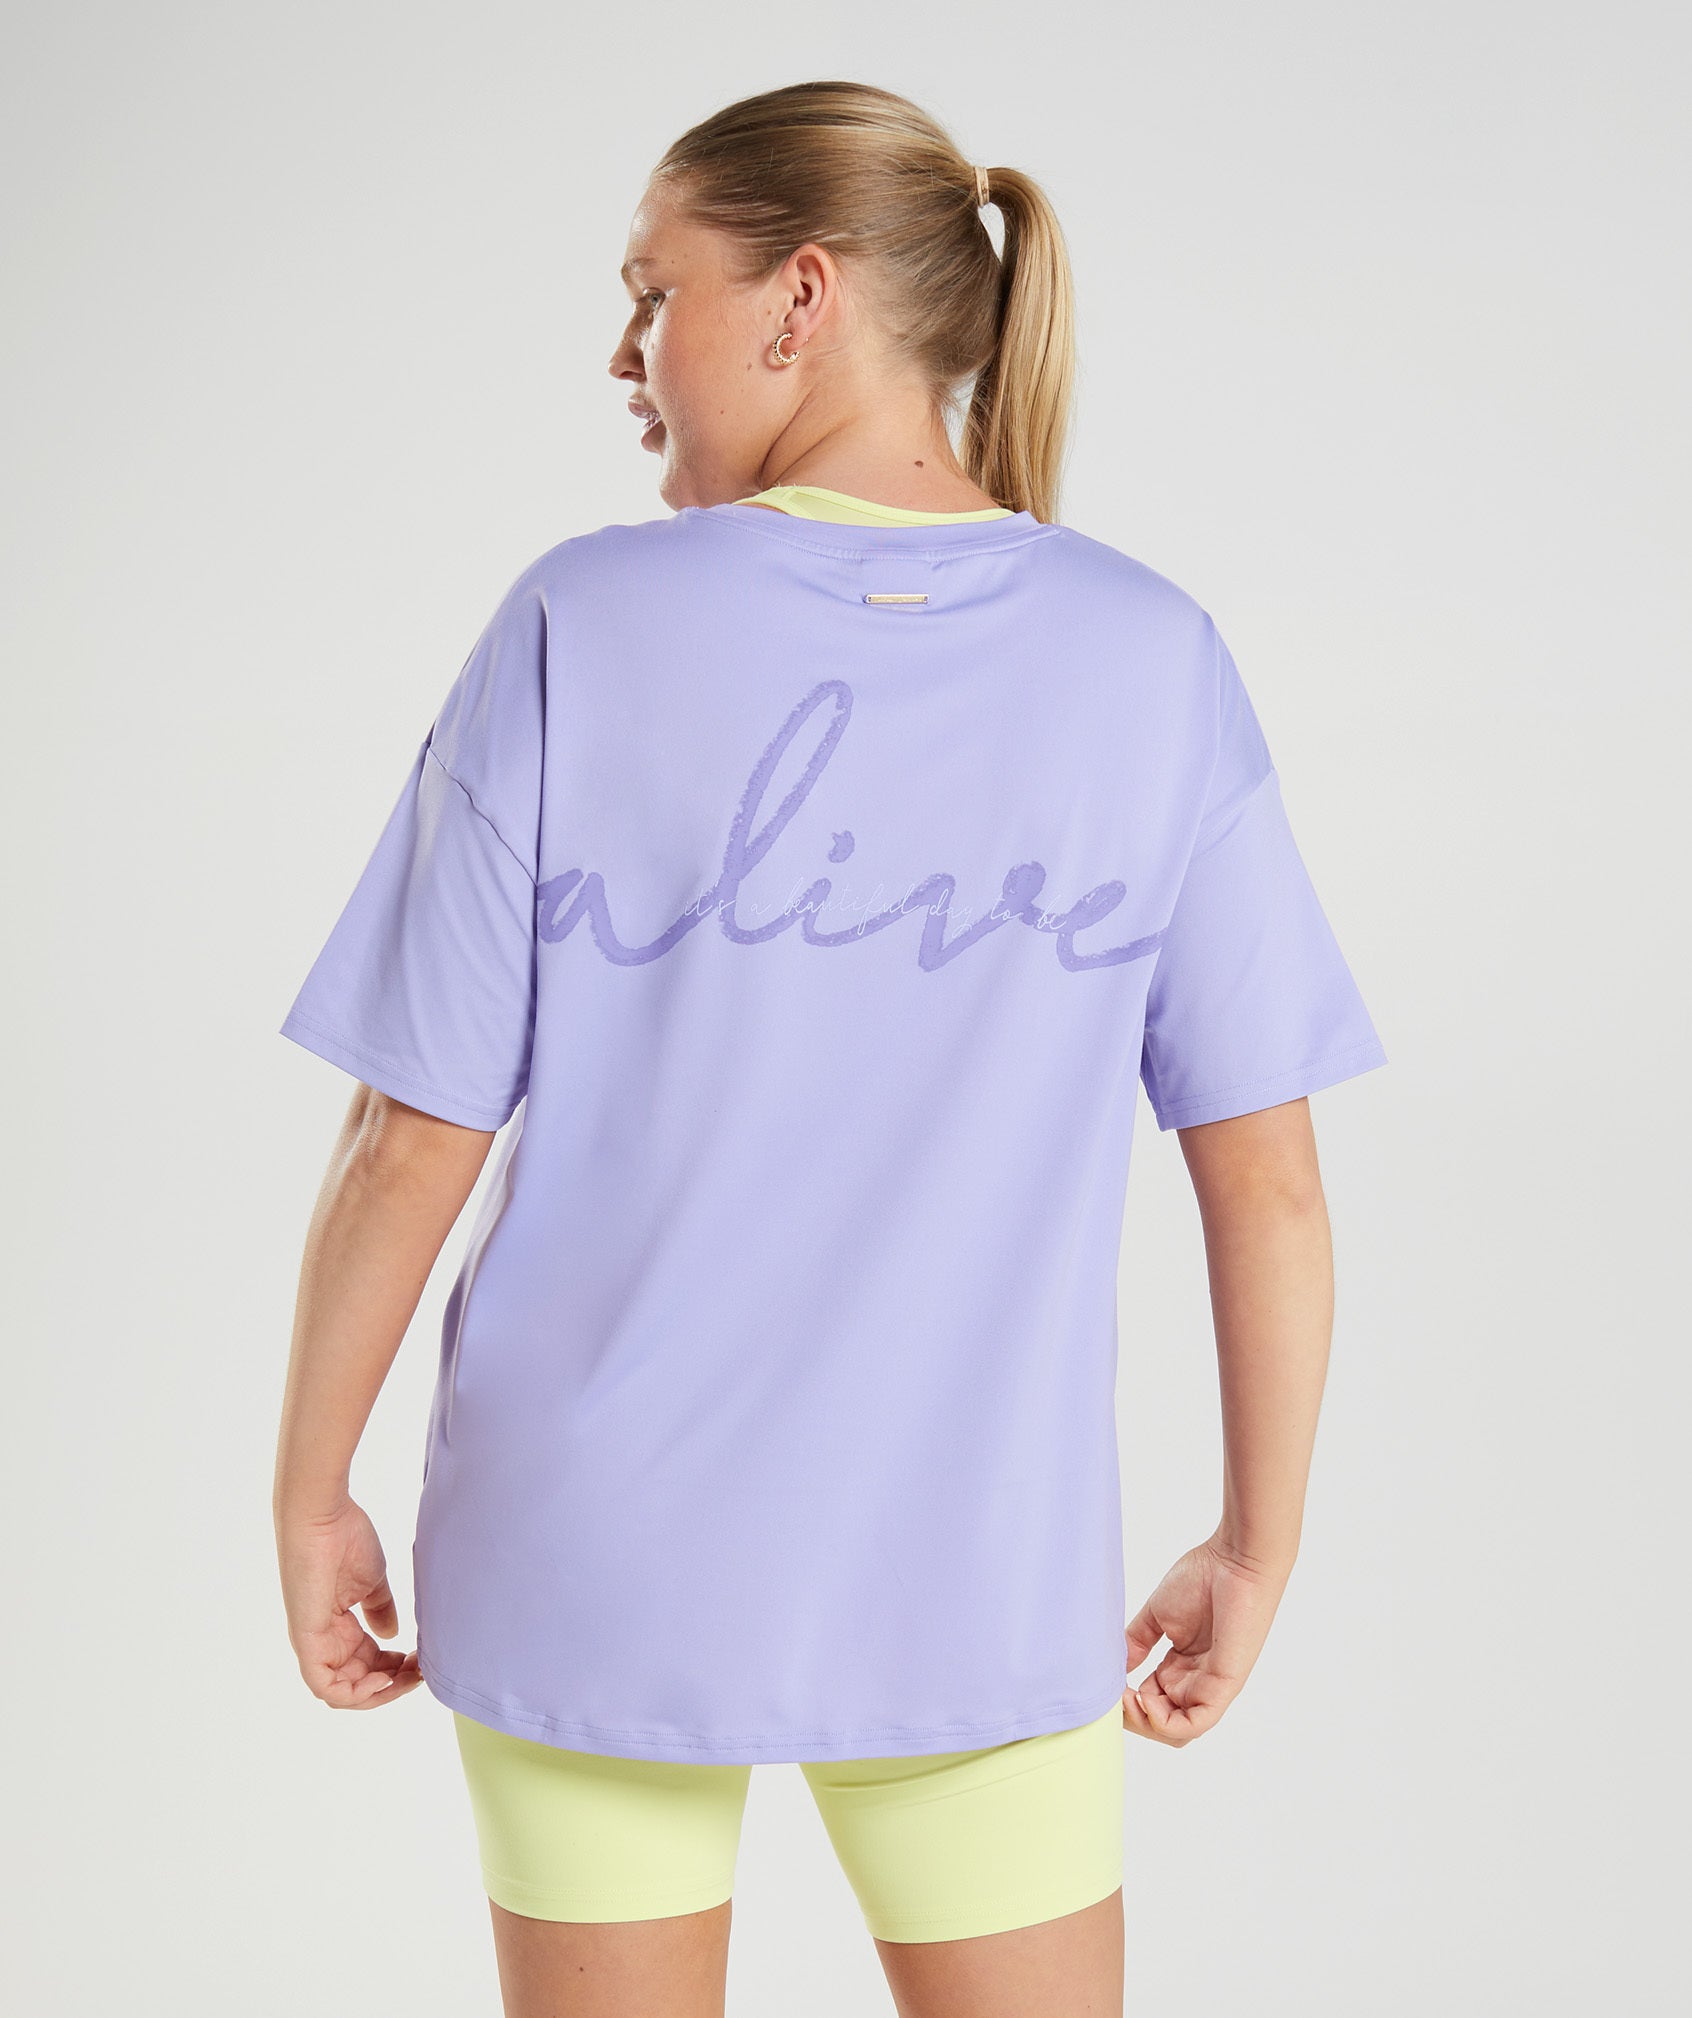 Whitney Oversized T-Shirt in Wildflower Purple - view 2